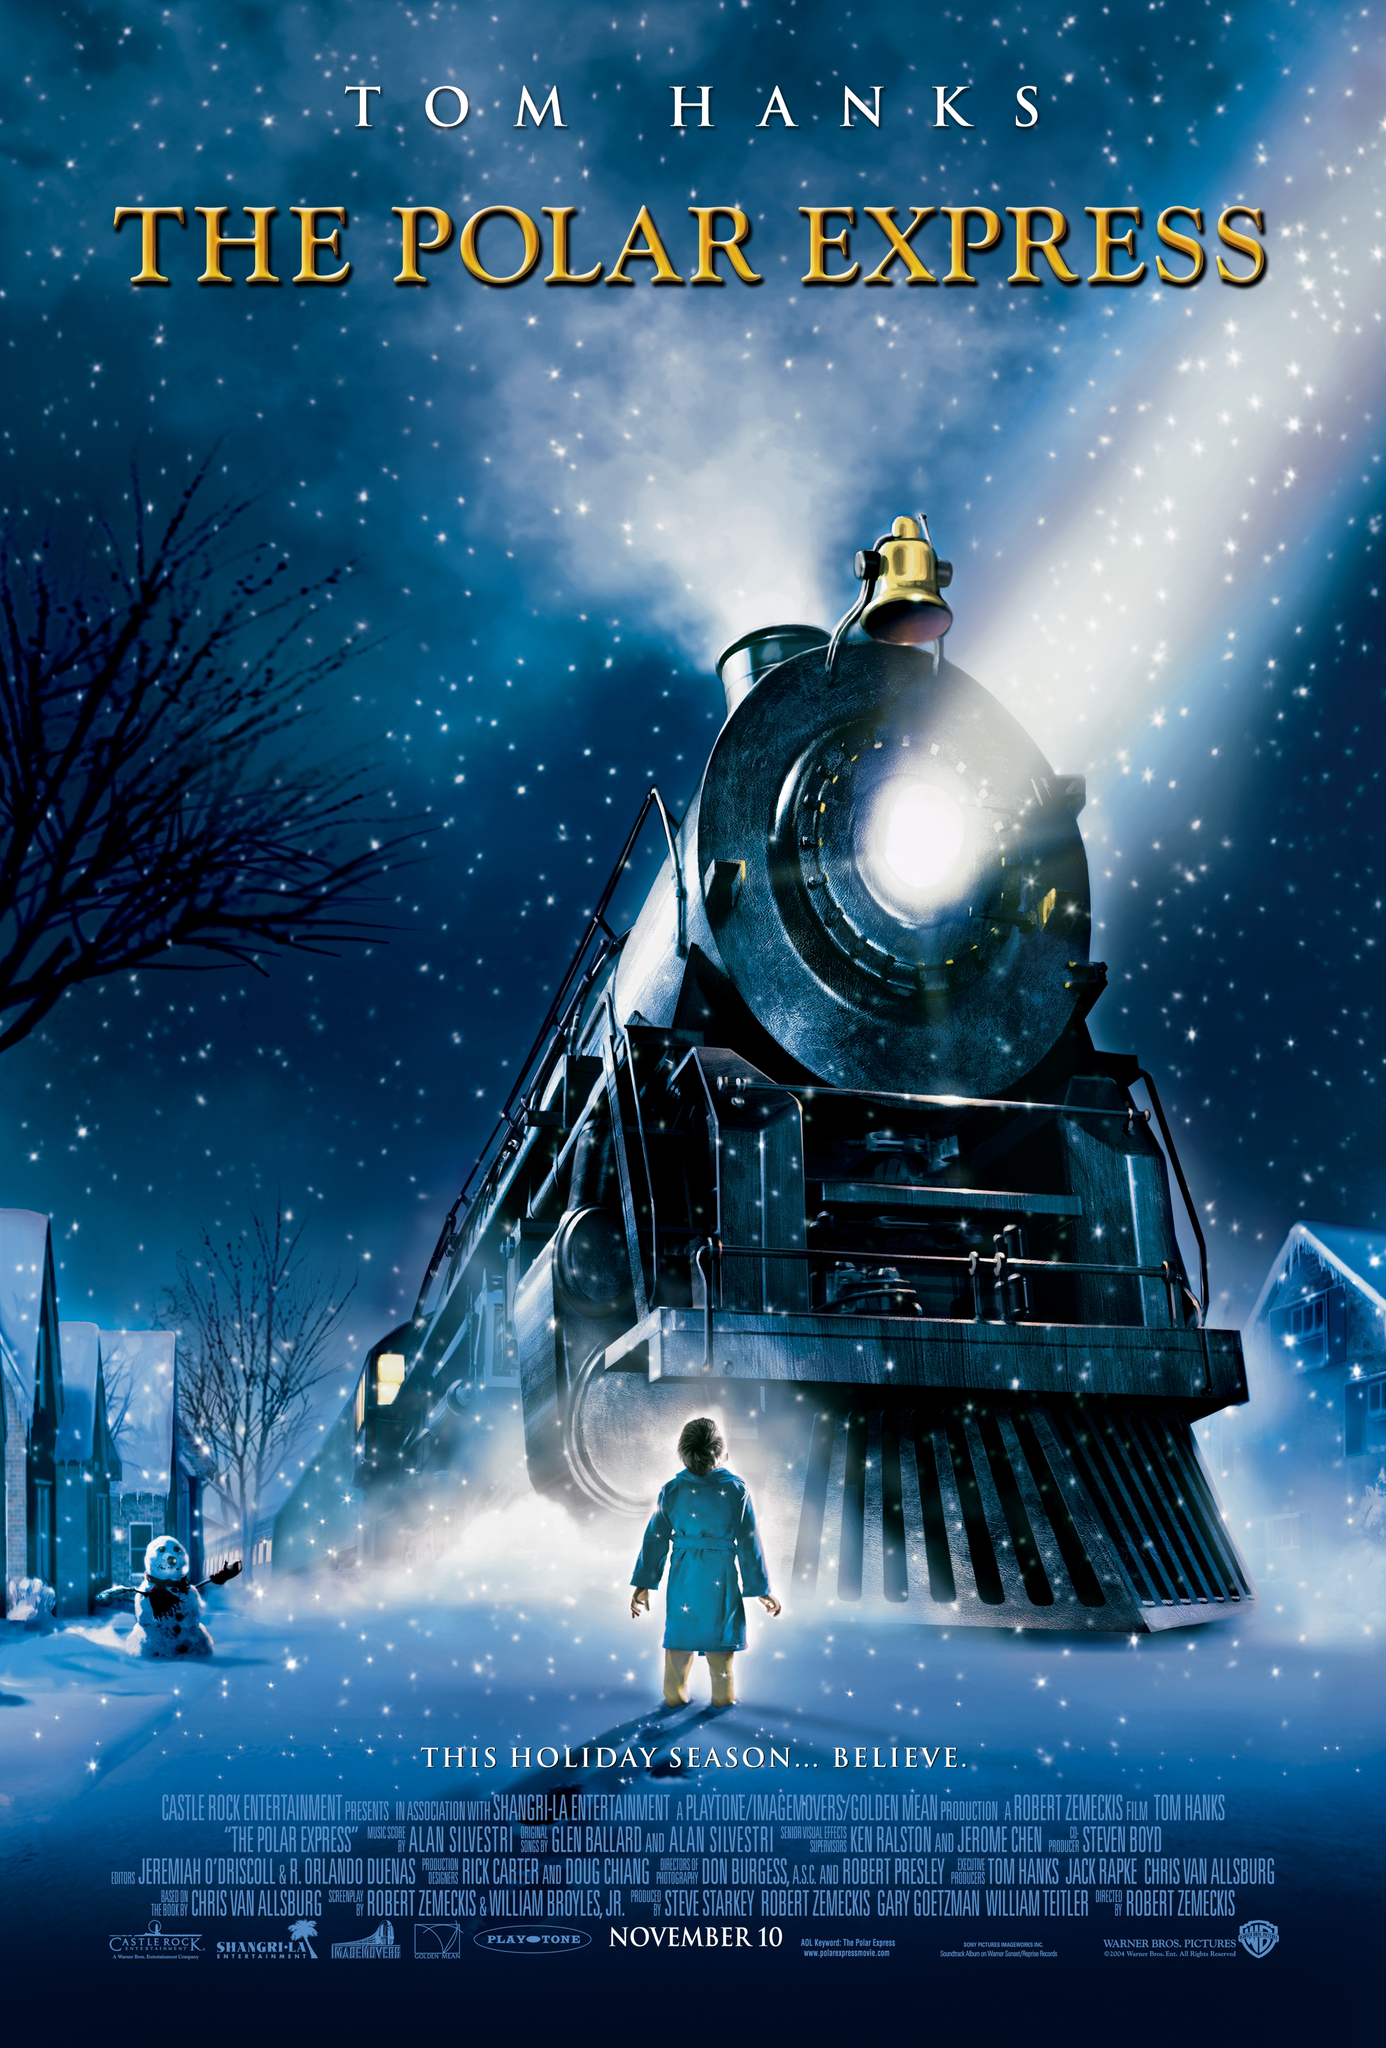 The Polar Express (2004) movie poster